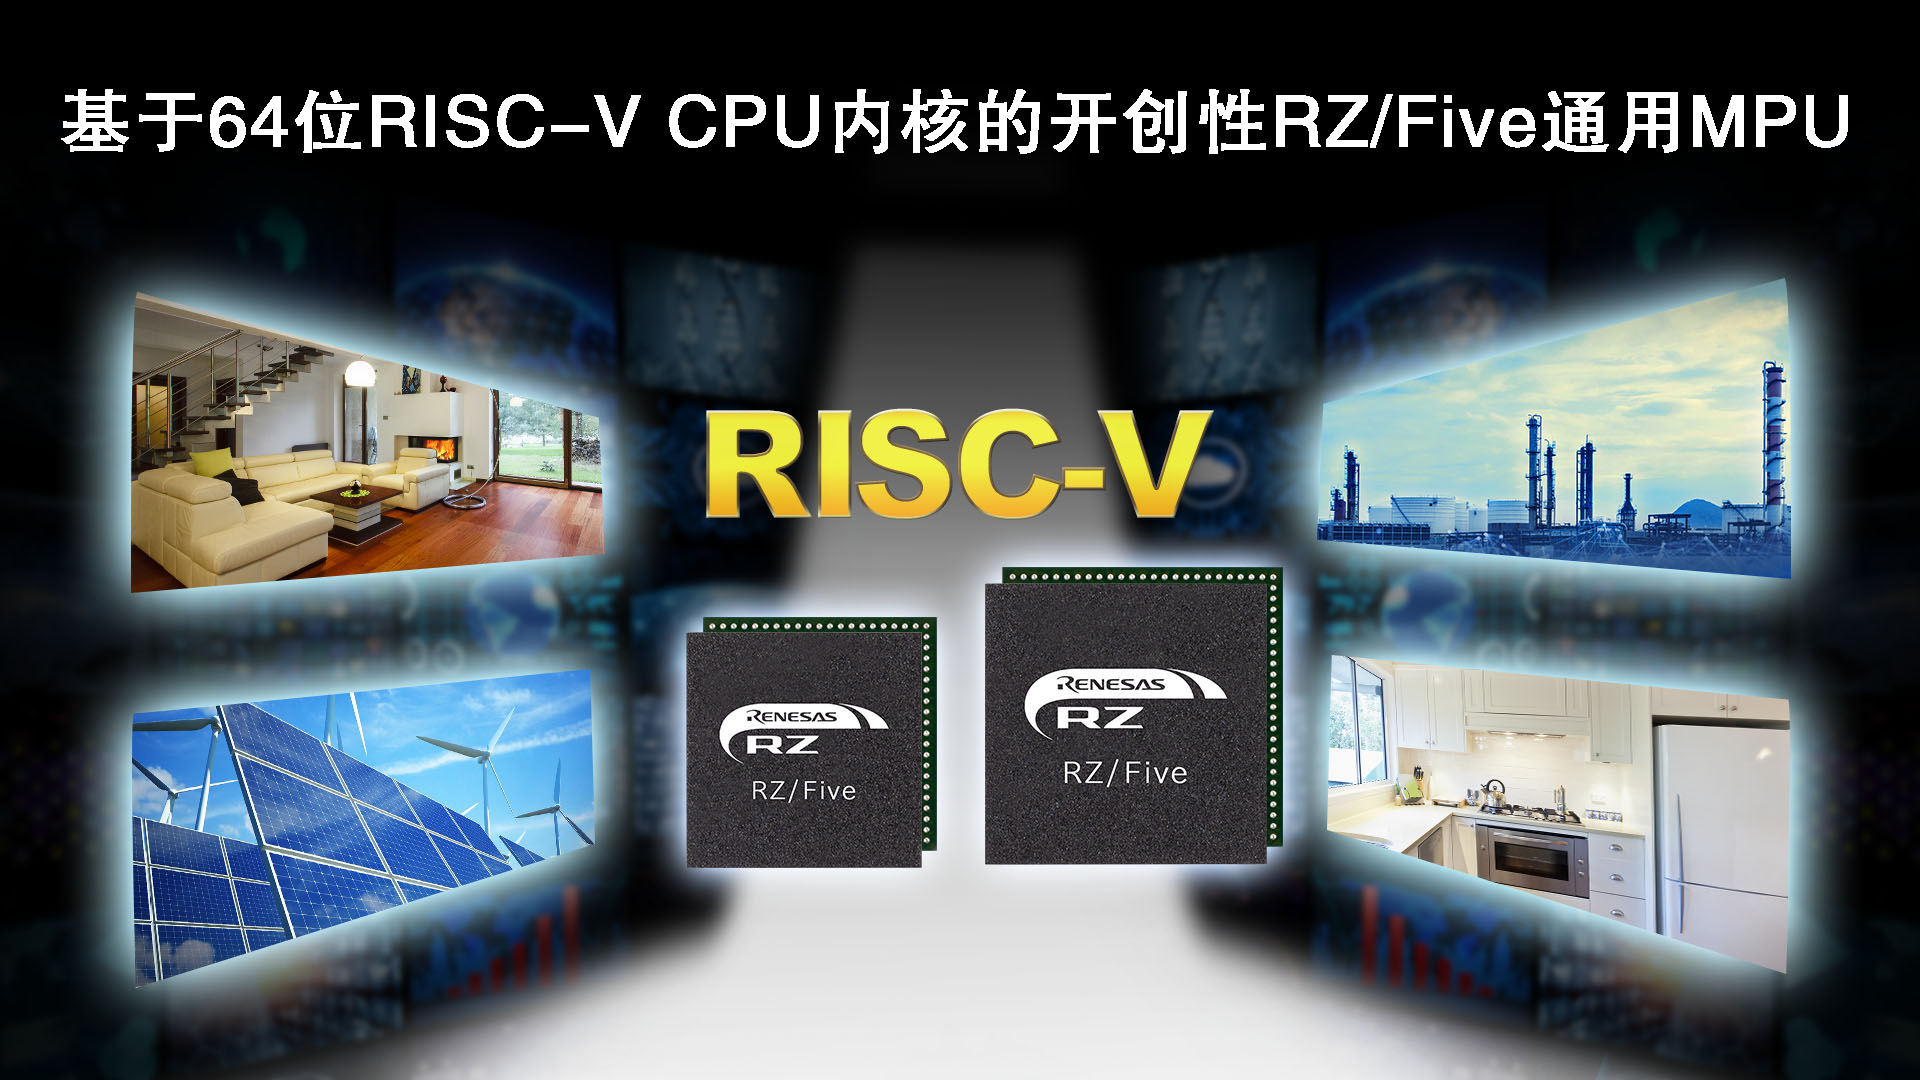 “基于64位RISC-V